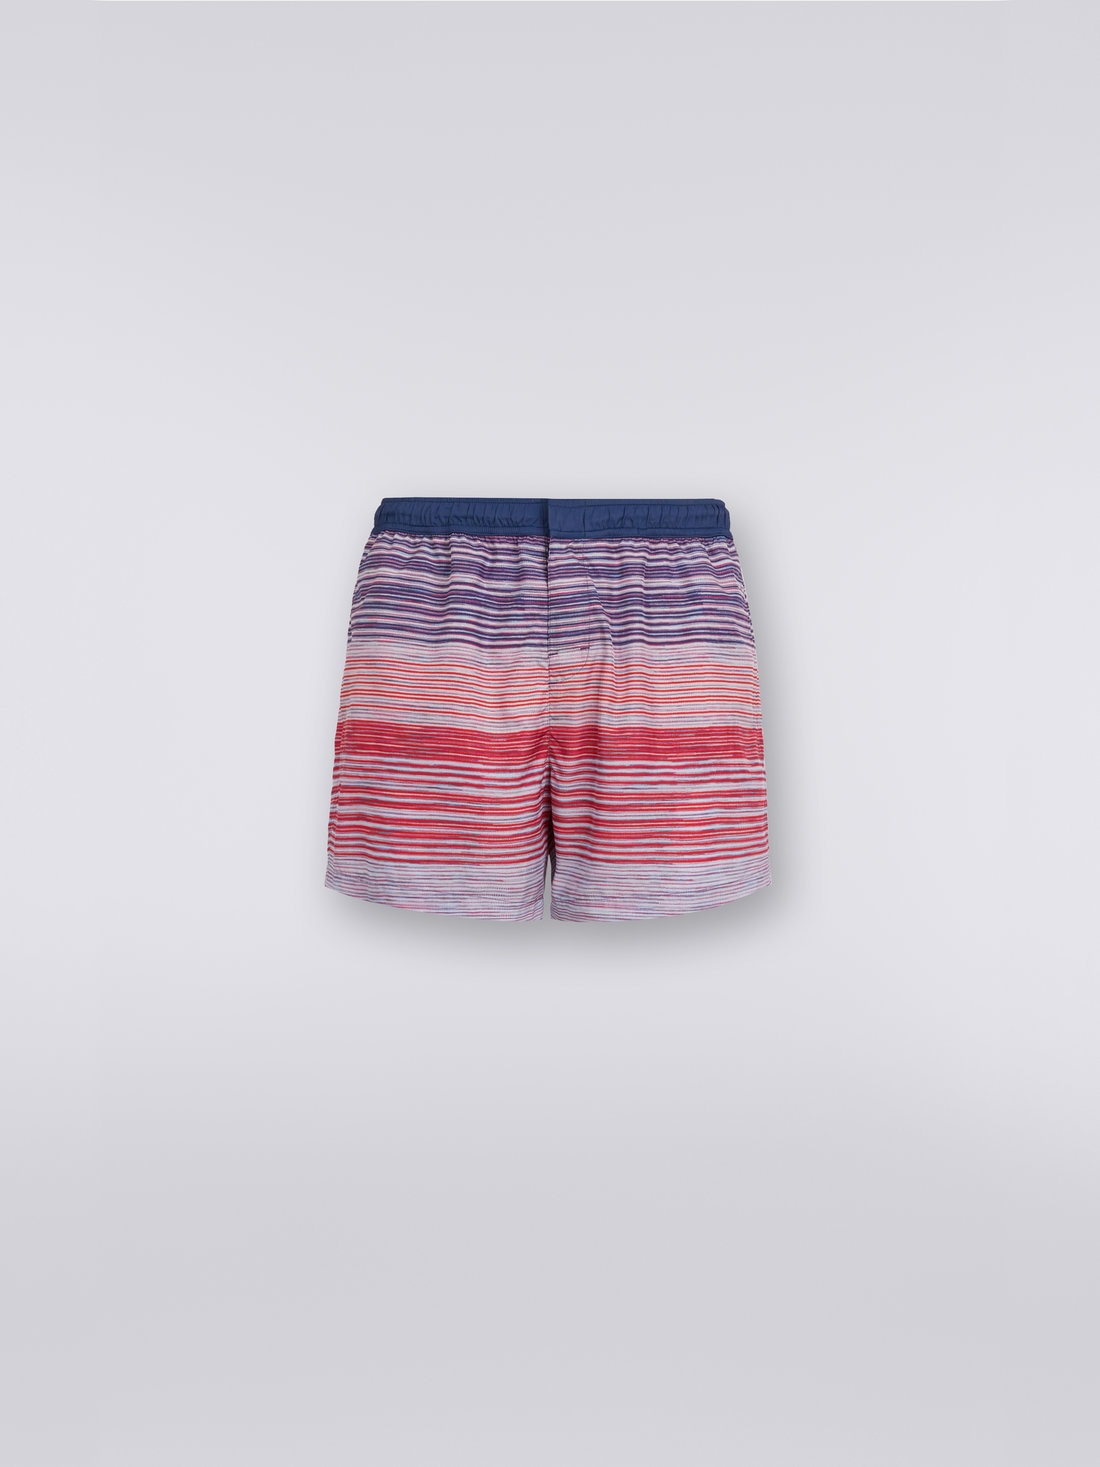 Nylon-blend swimming trunks in slub print, Red, Purple & Light Blue - US23SP04BW00M6F402H - 0